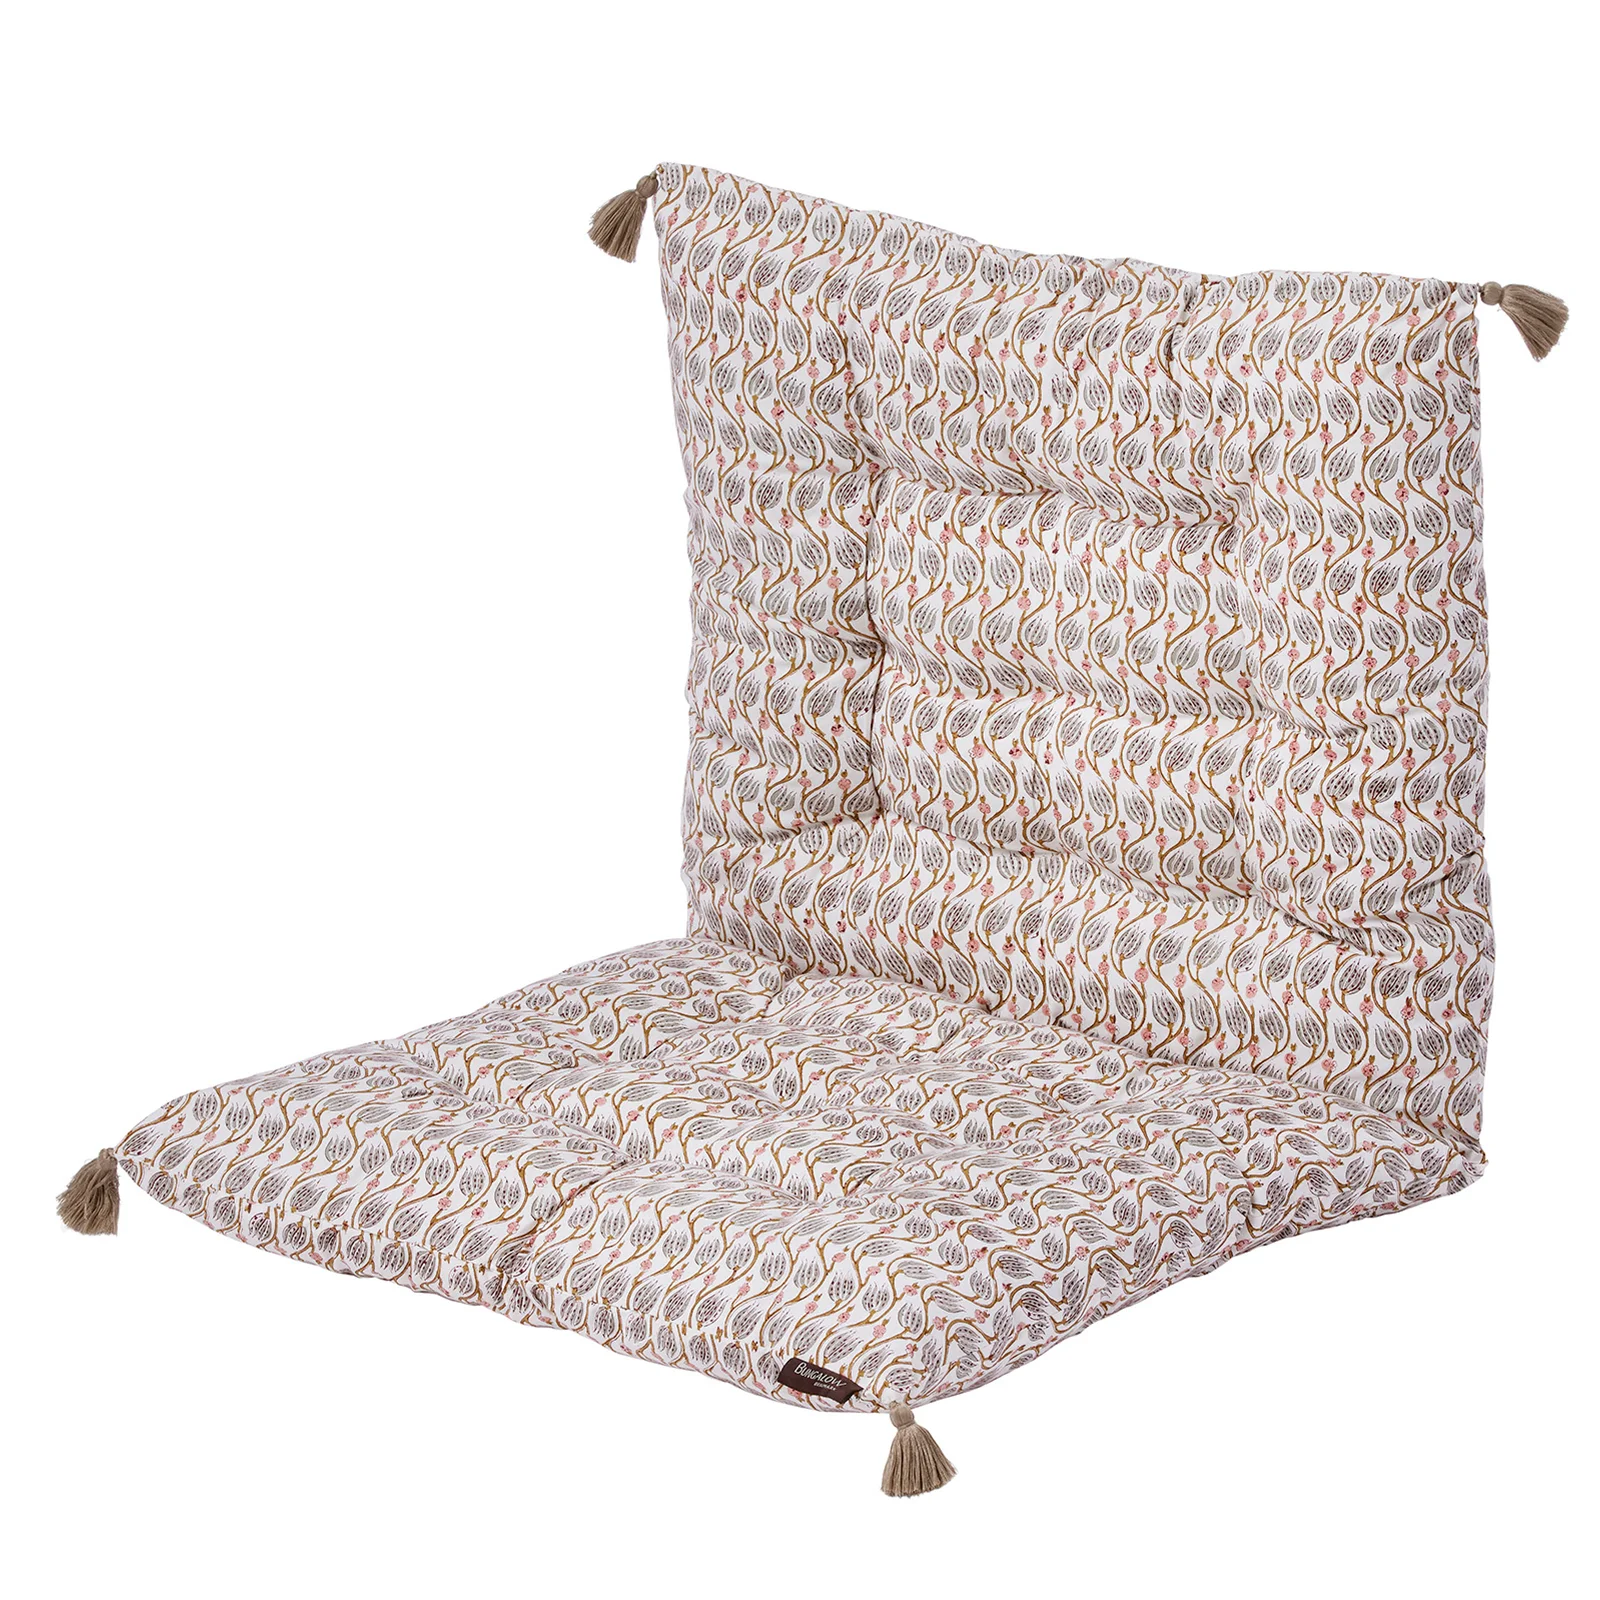 Bungalow Denmark Seat Cushion - Lotus Sandstone Image 1